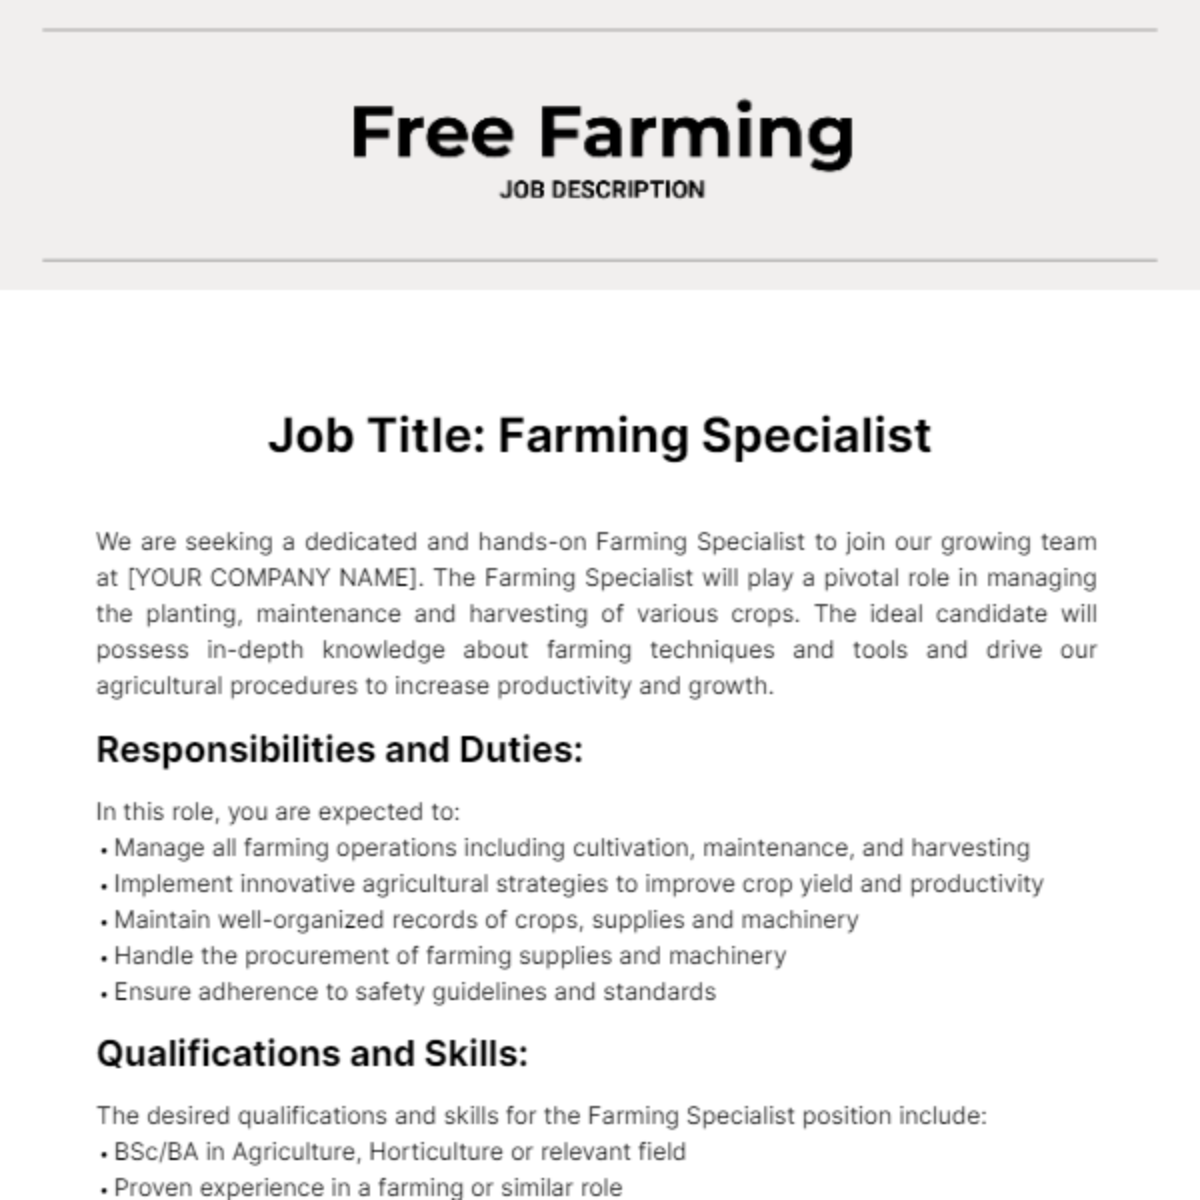 Free Farming Job Description Template